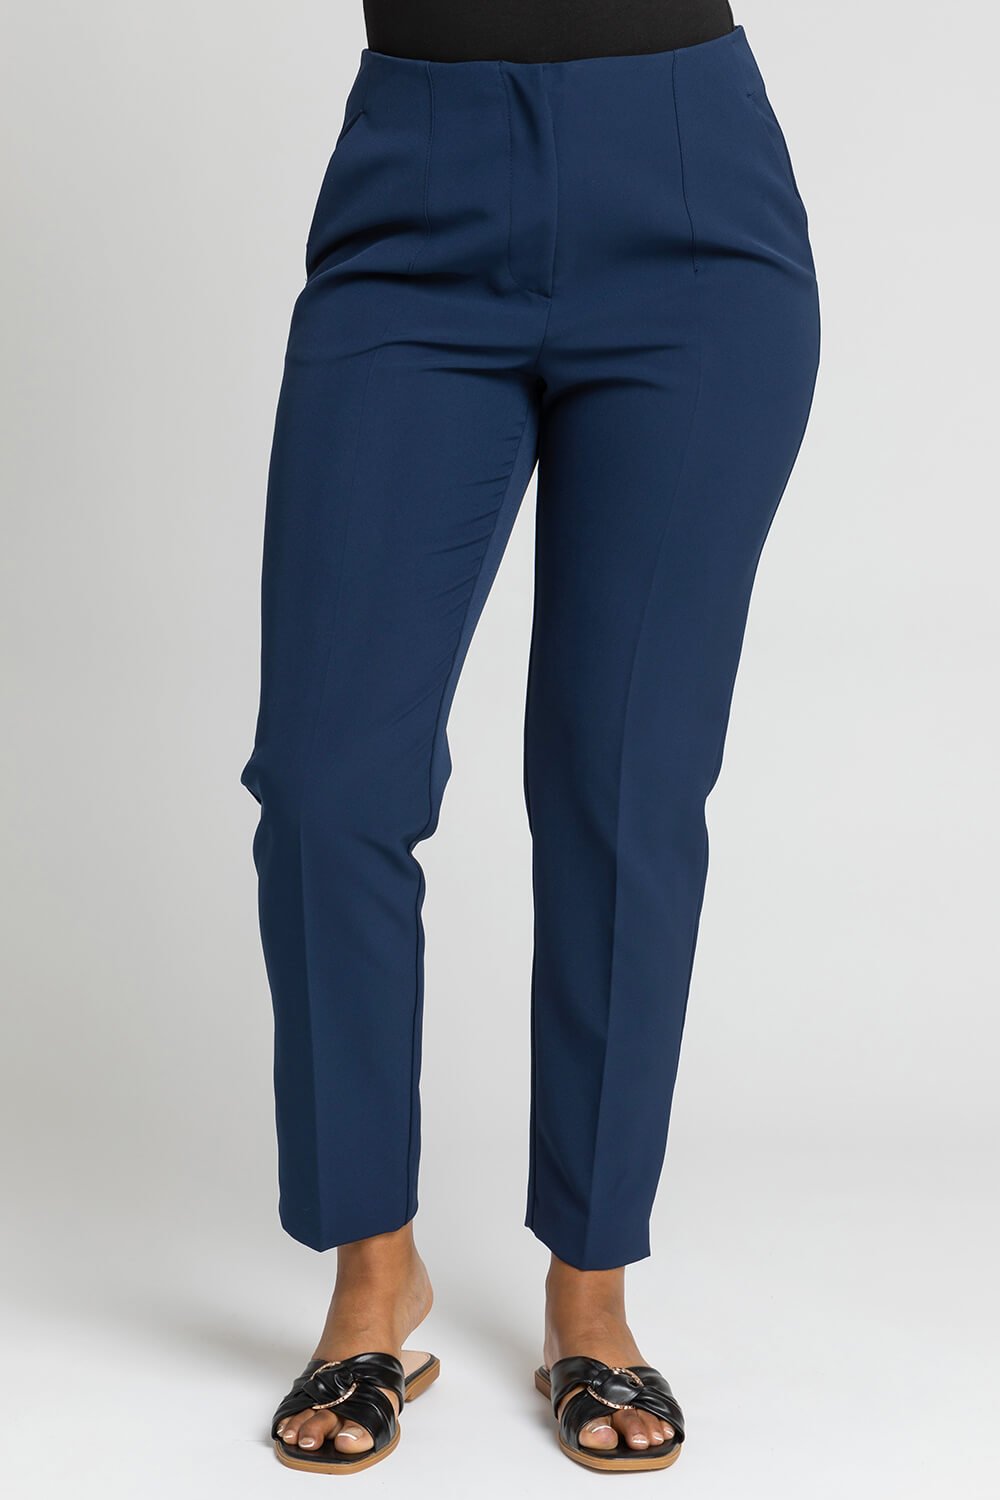 NIMIN Womens High Waisted Business Casual Pants Stylish Versatile Offi